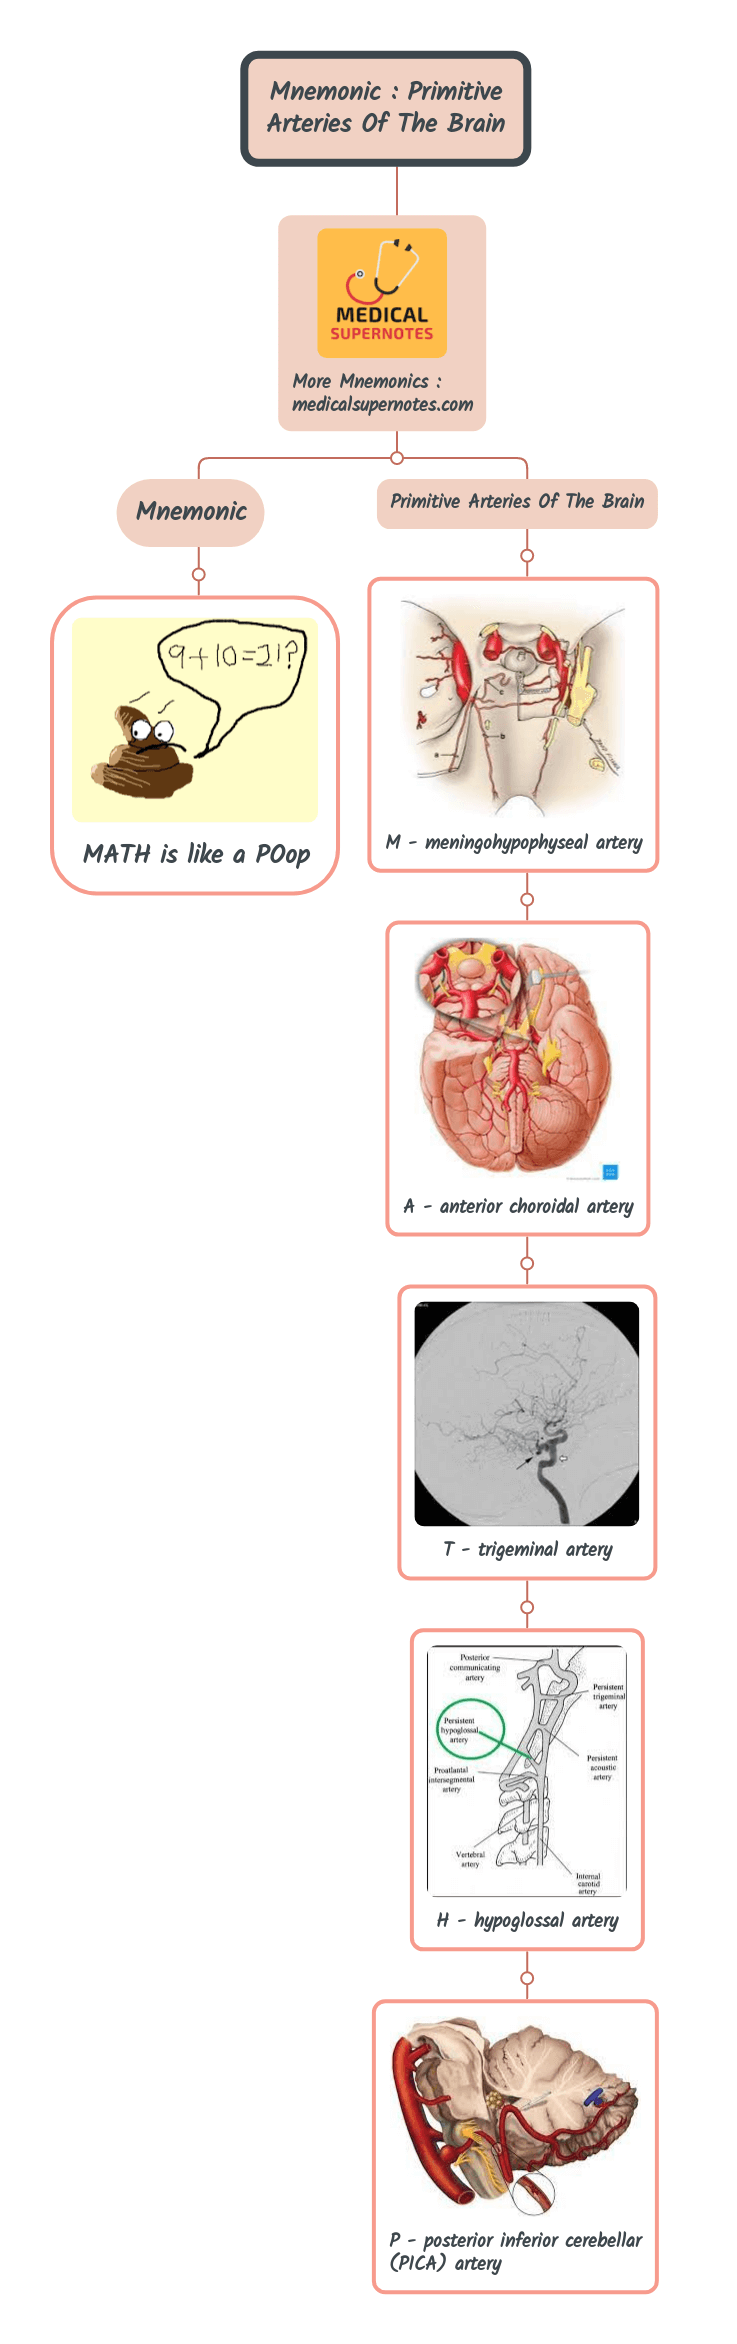 Mnemonic _ Primitive Arteries Of The Brain